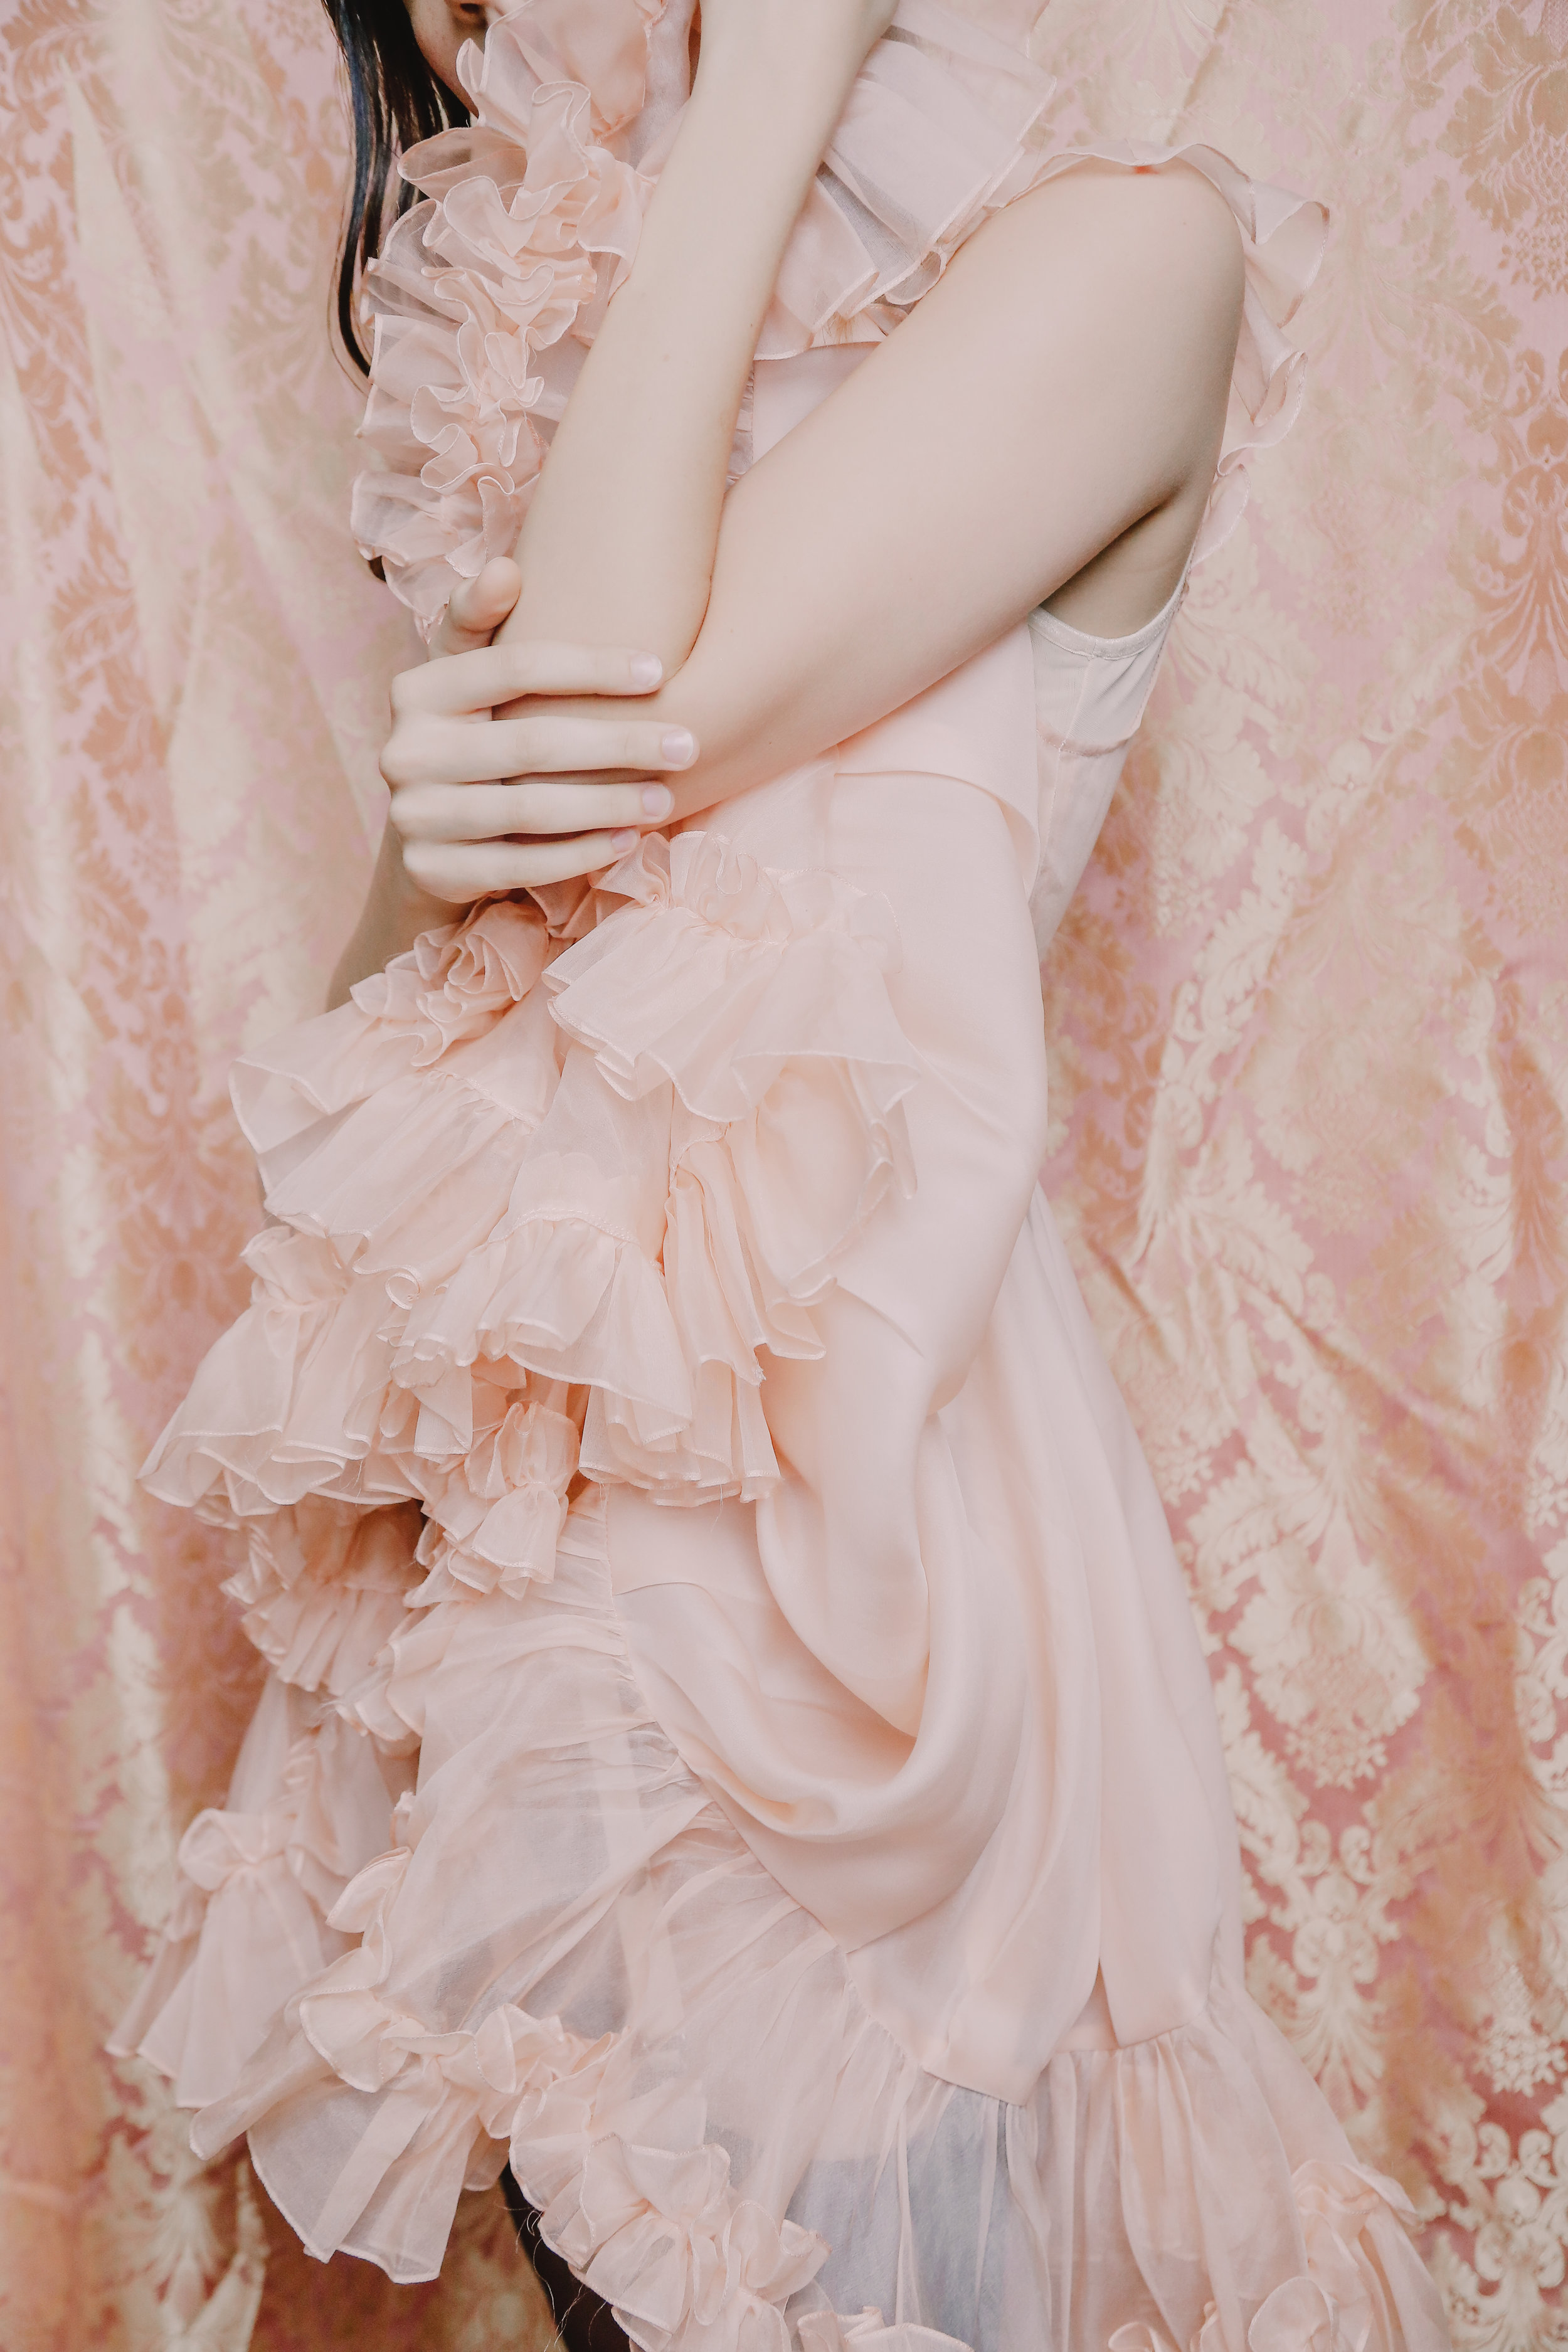 vanity teen fashion editorial featuring kelsey randall peach silk organza mermaid dress